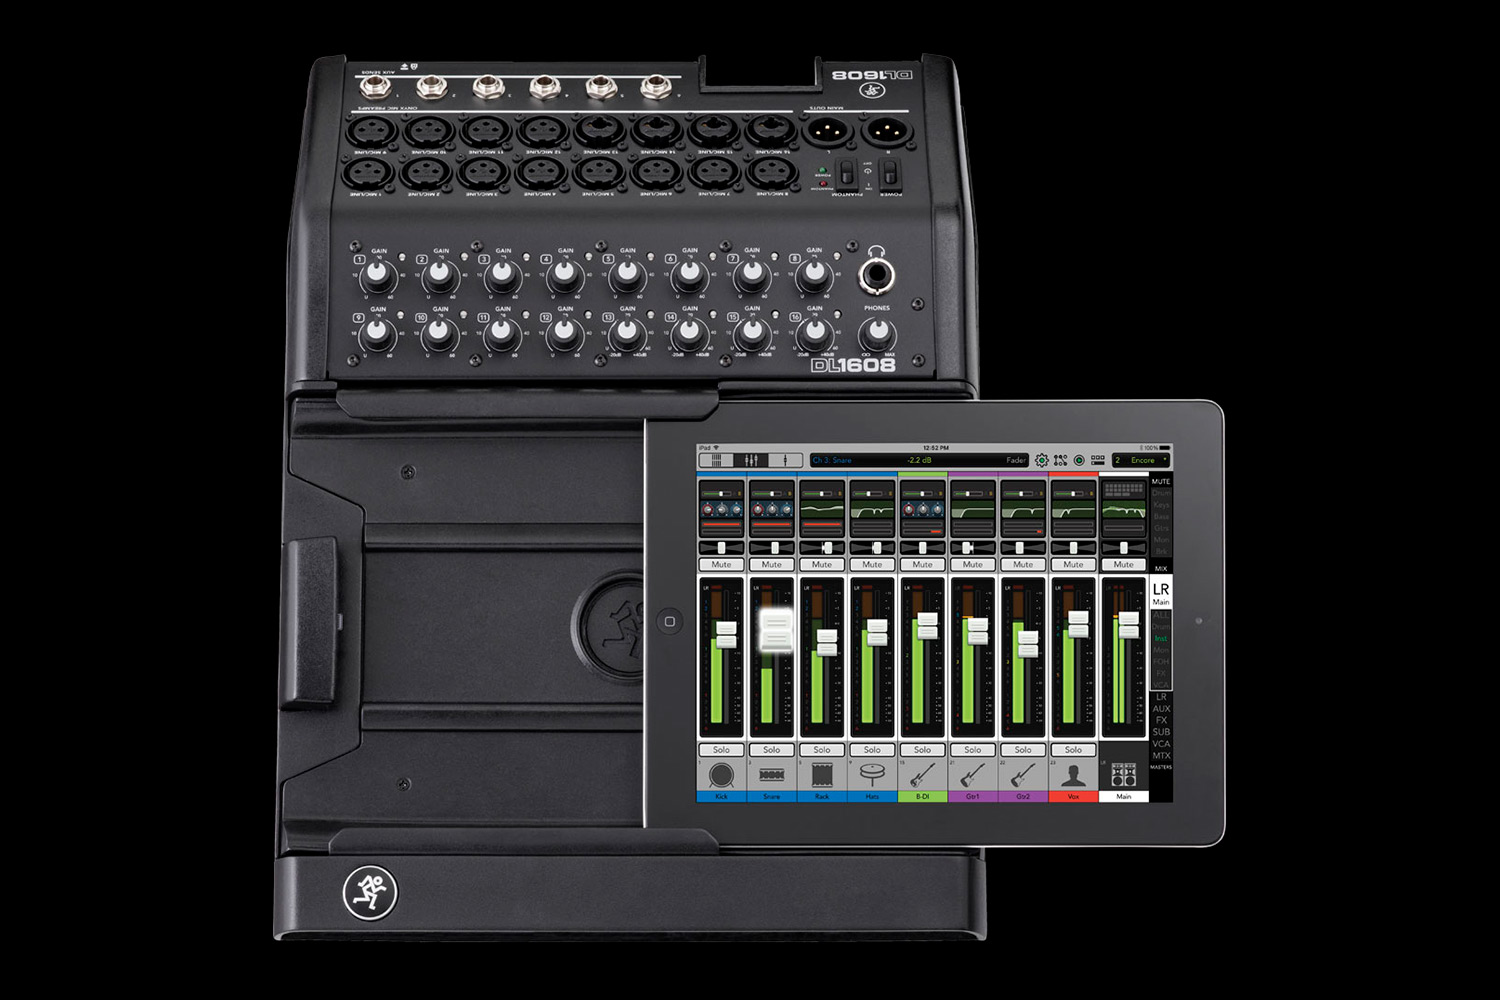 DL1608 Wireless Digital Mixer | DL Series | Mixers | MACKIE